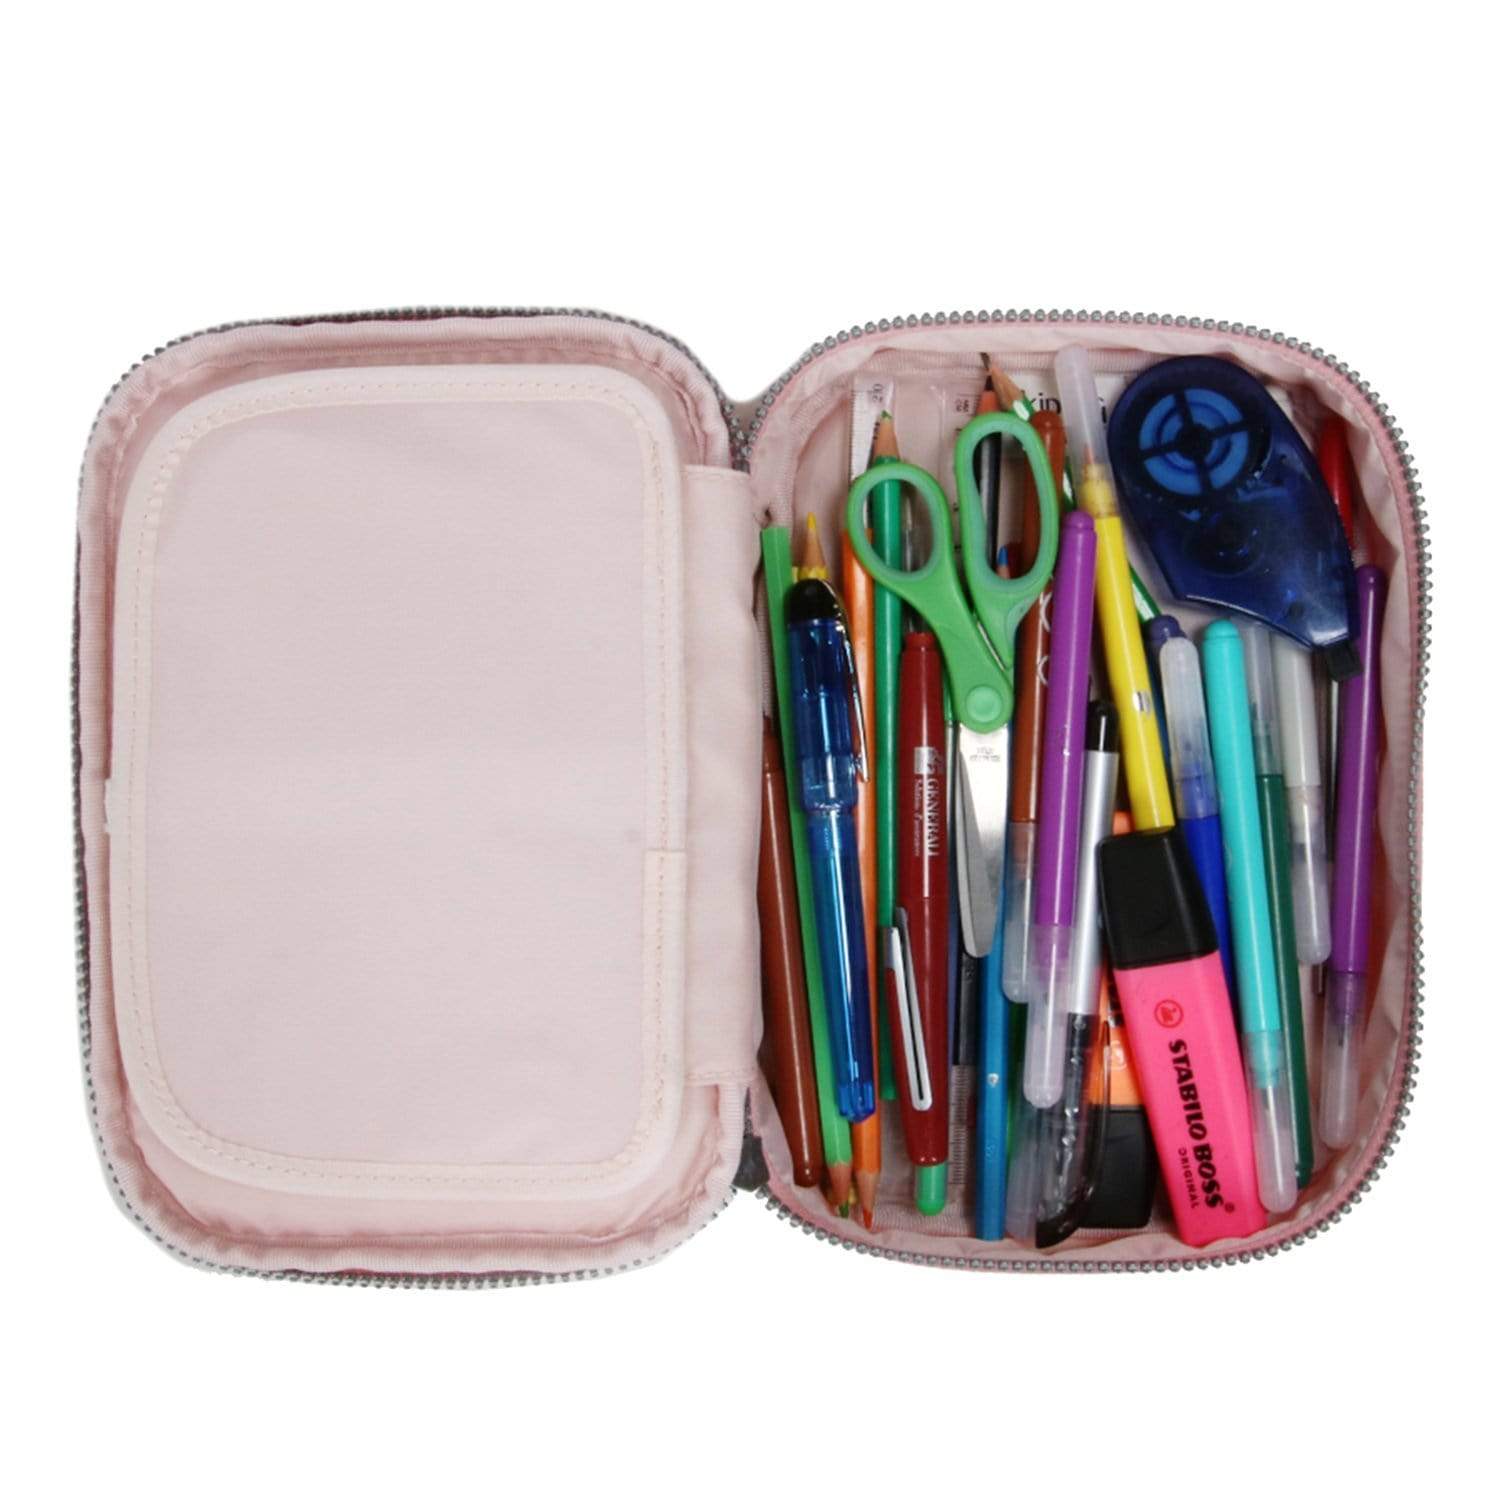 kipling pencil case Size: 8.75''L x 2.5''H x 2.5''D